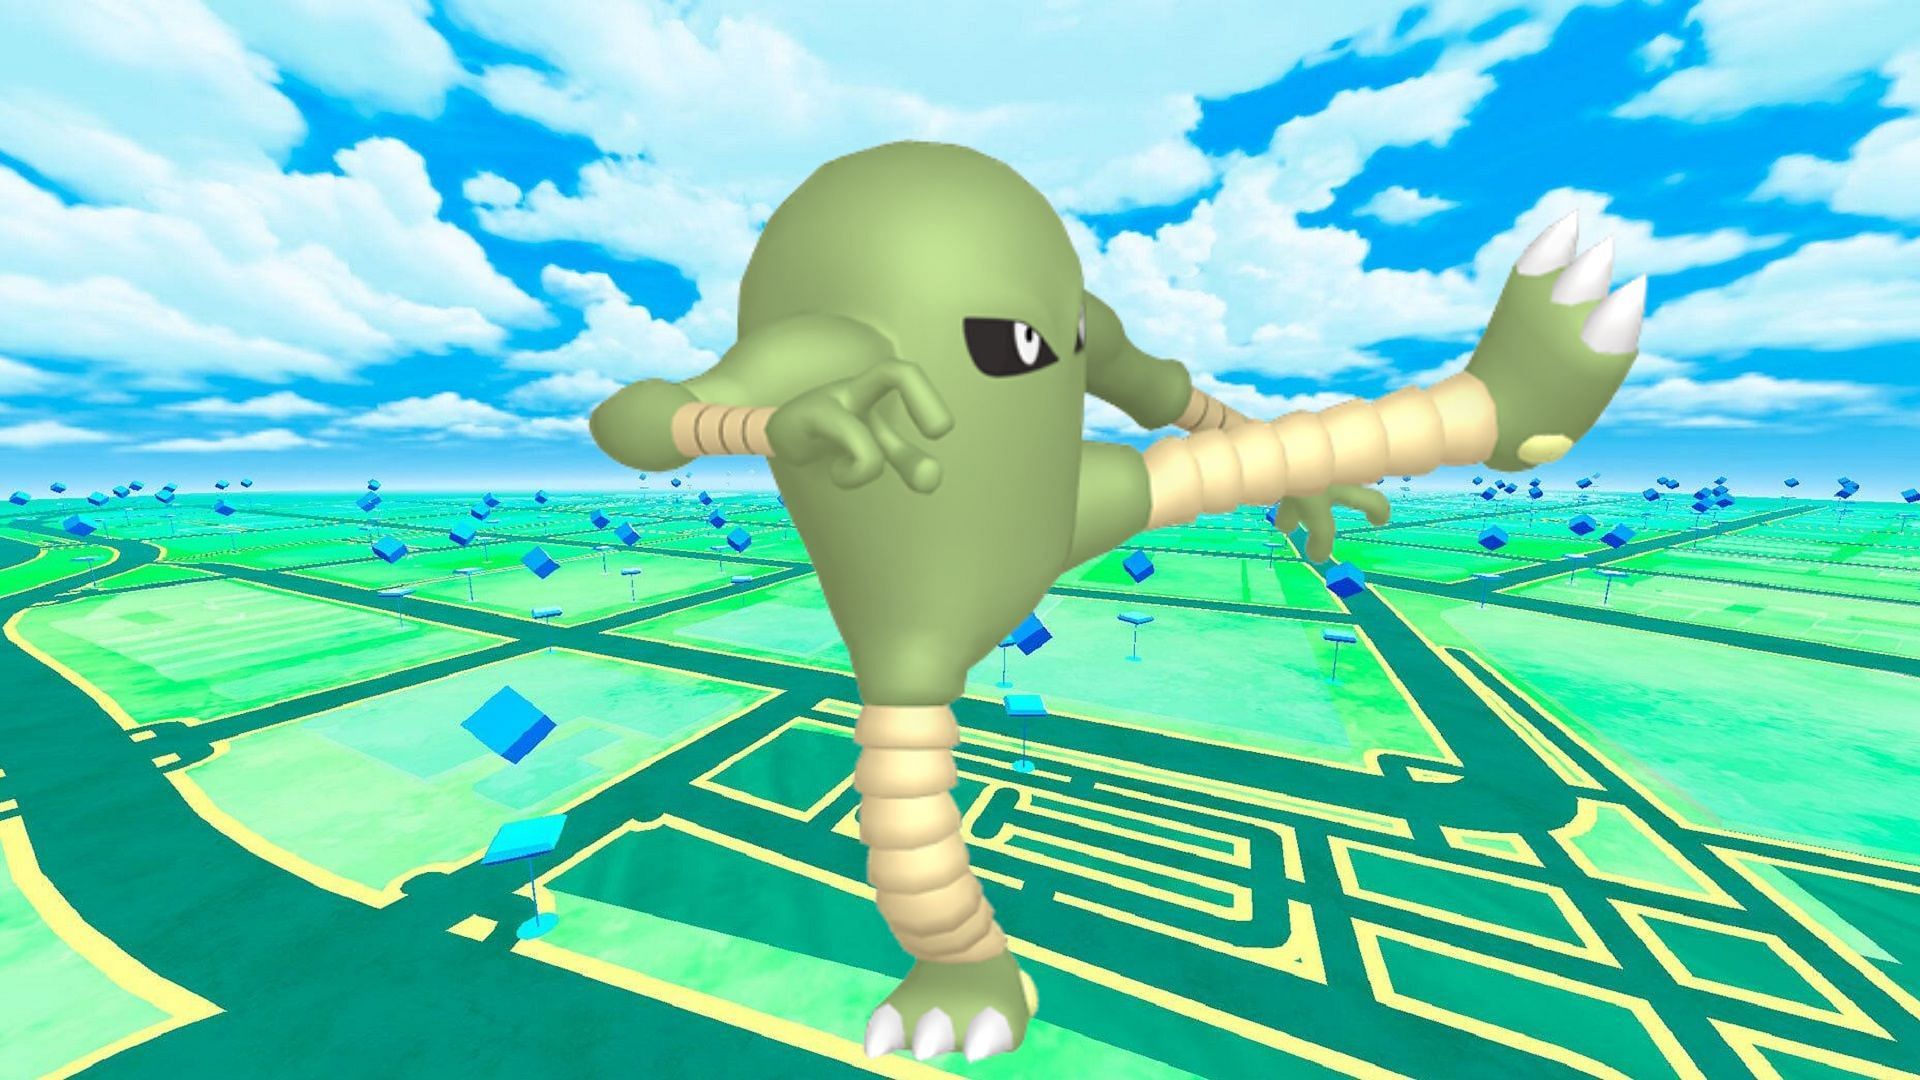 Shiny Hitmonlee has a green coloration compared to its standard counterpart in Pokemon GO (Image via The Pokemon Company)